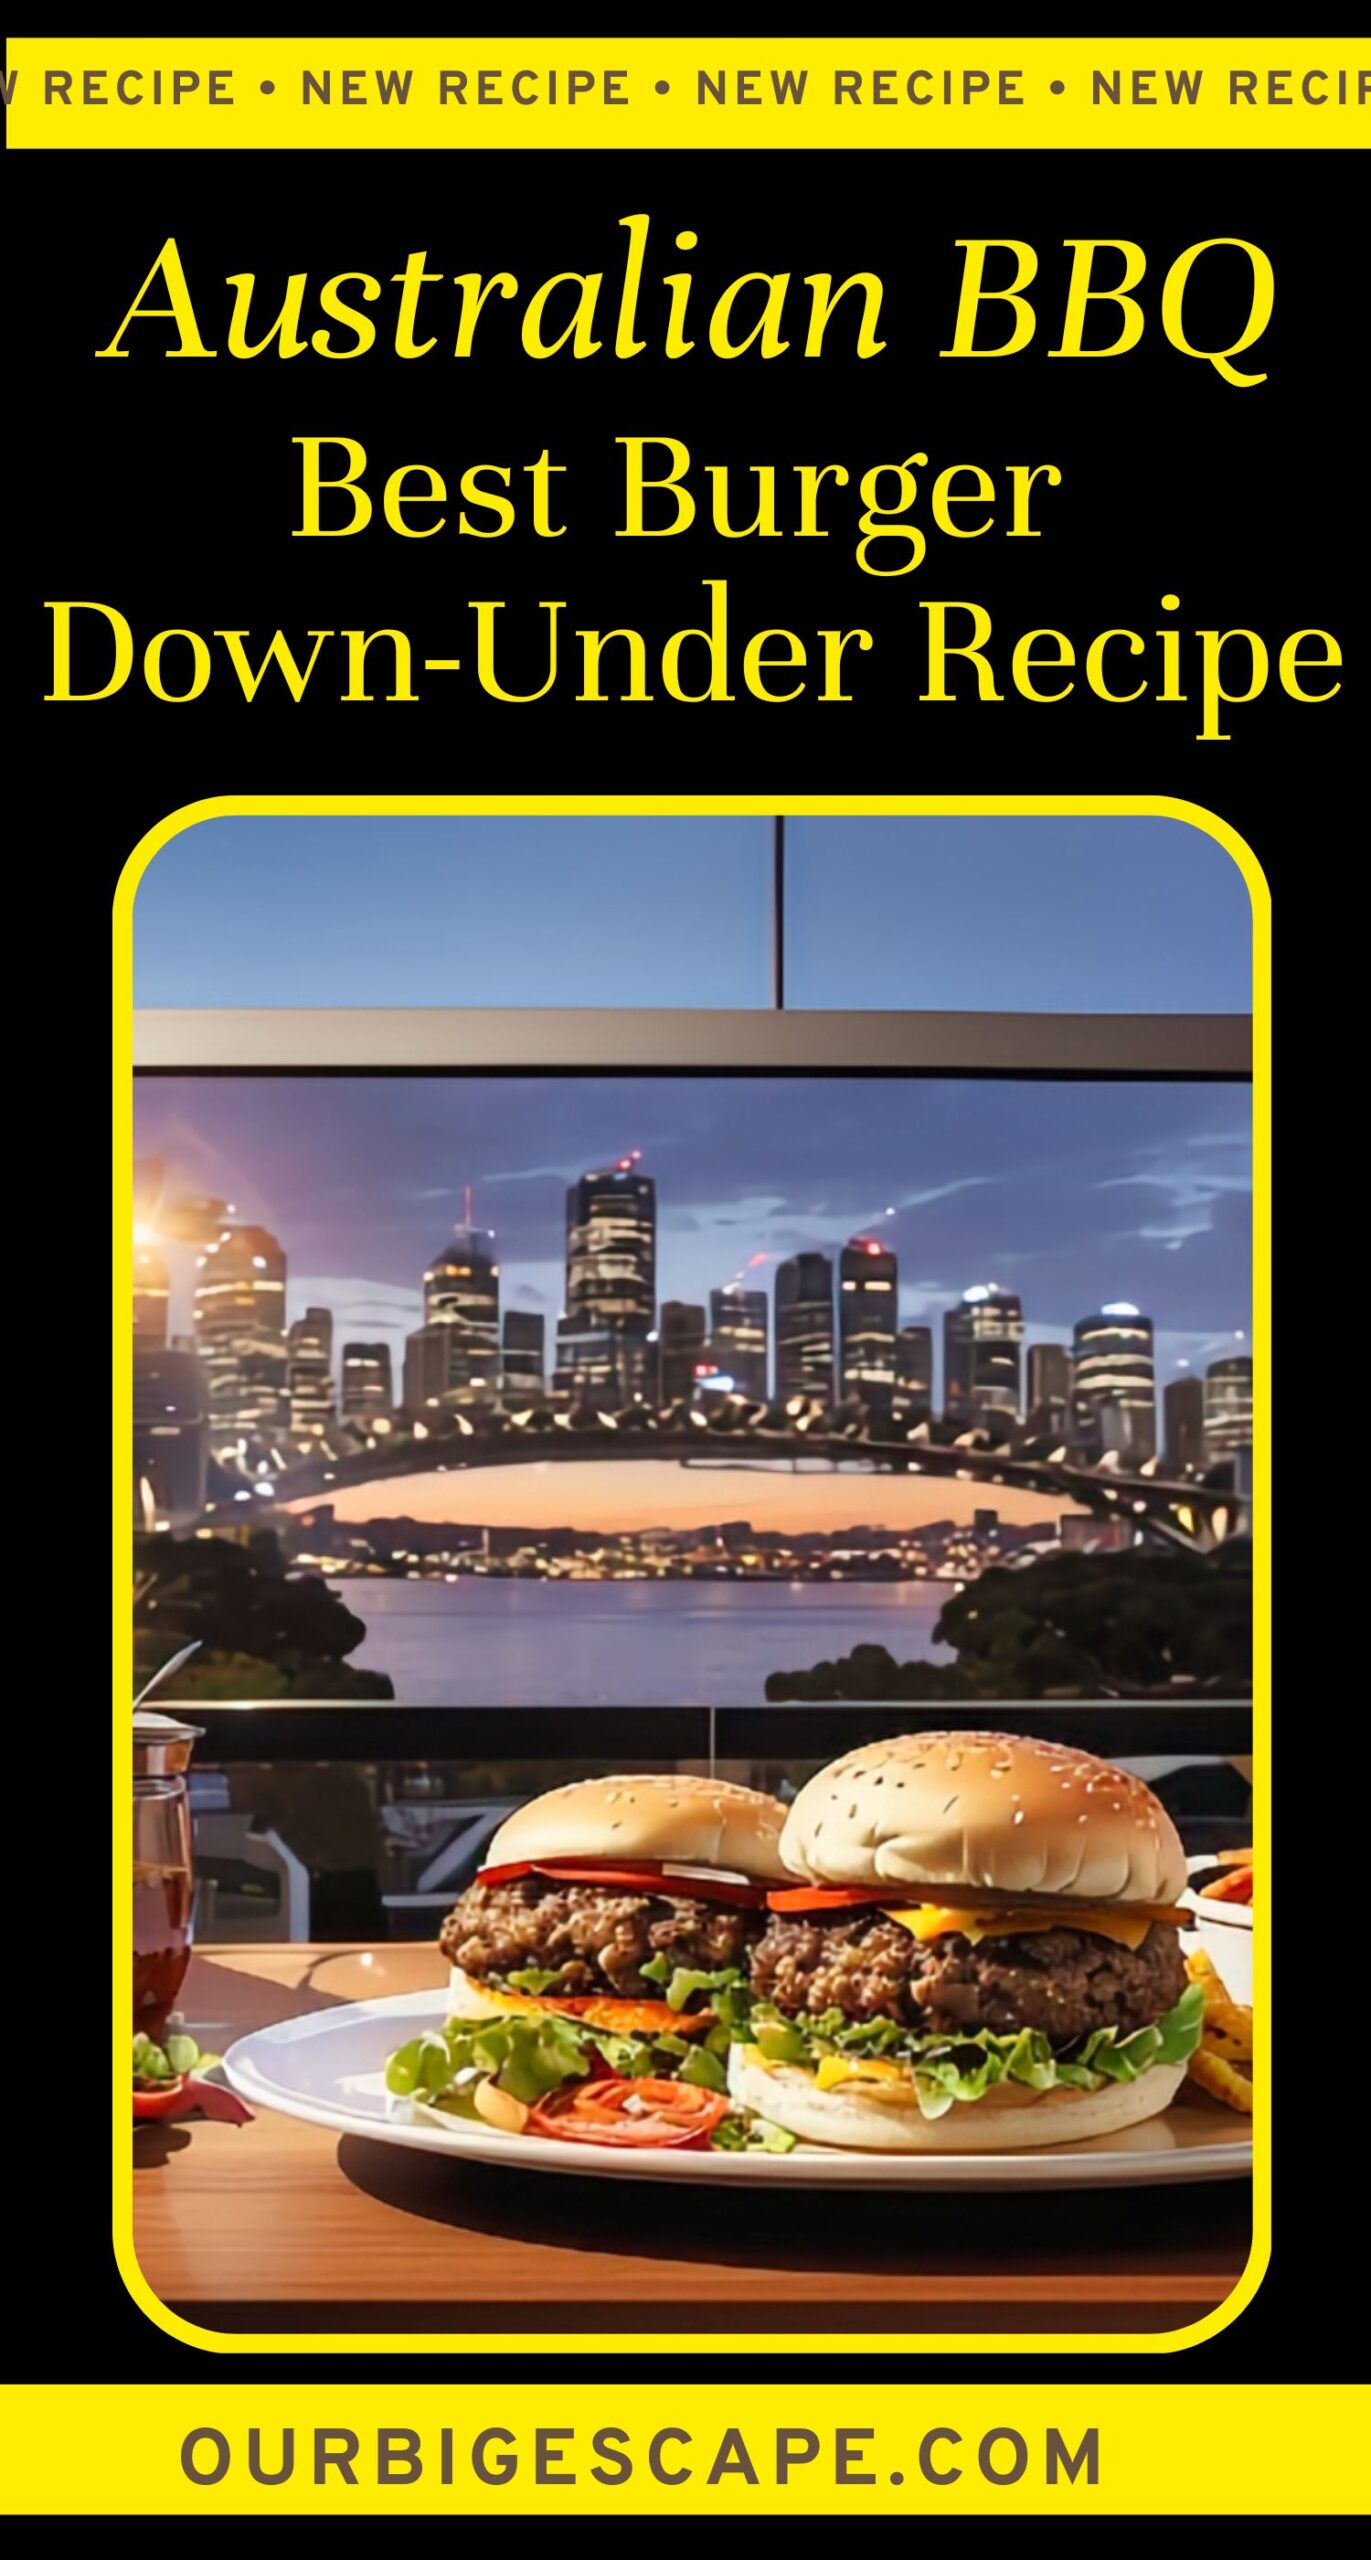 11. Australian BBQ Best Burger Down-Under Recipe (1)